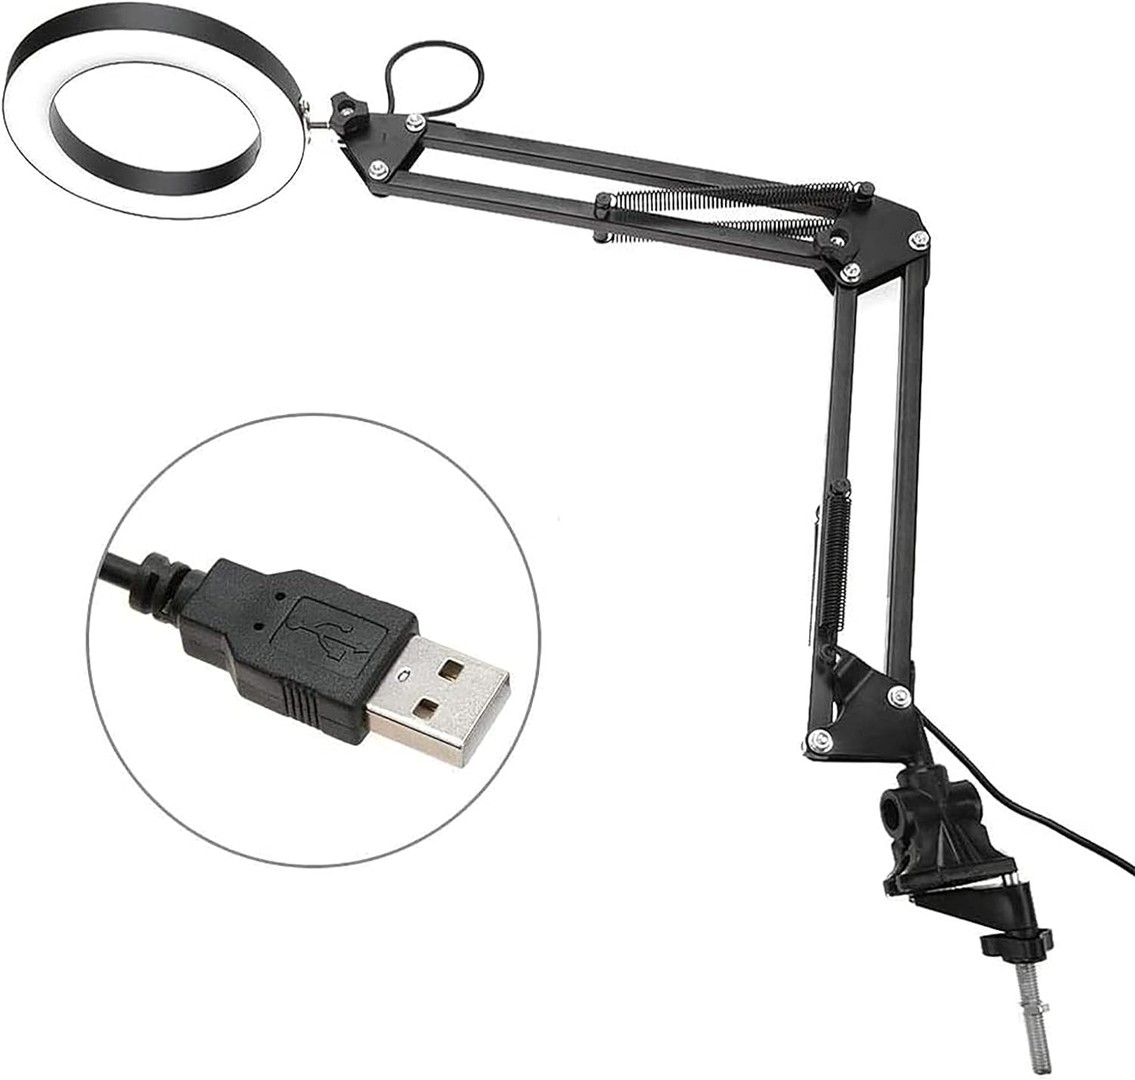 accesorios para electronica - Lámpara de escritorio con base y clip, regulable flexible de bajo consumo